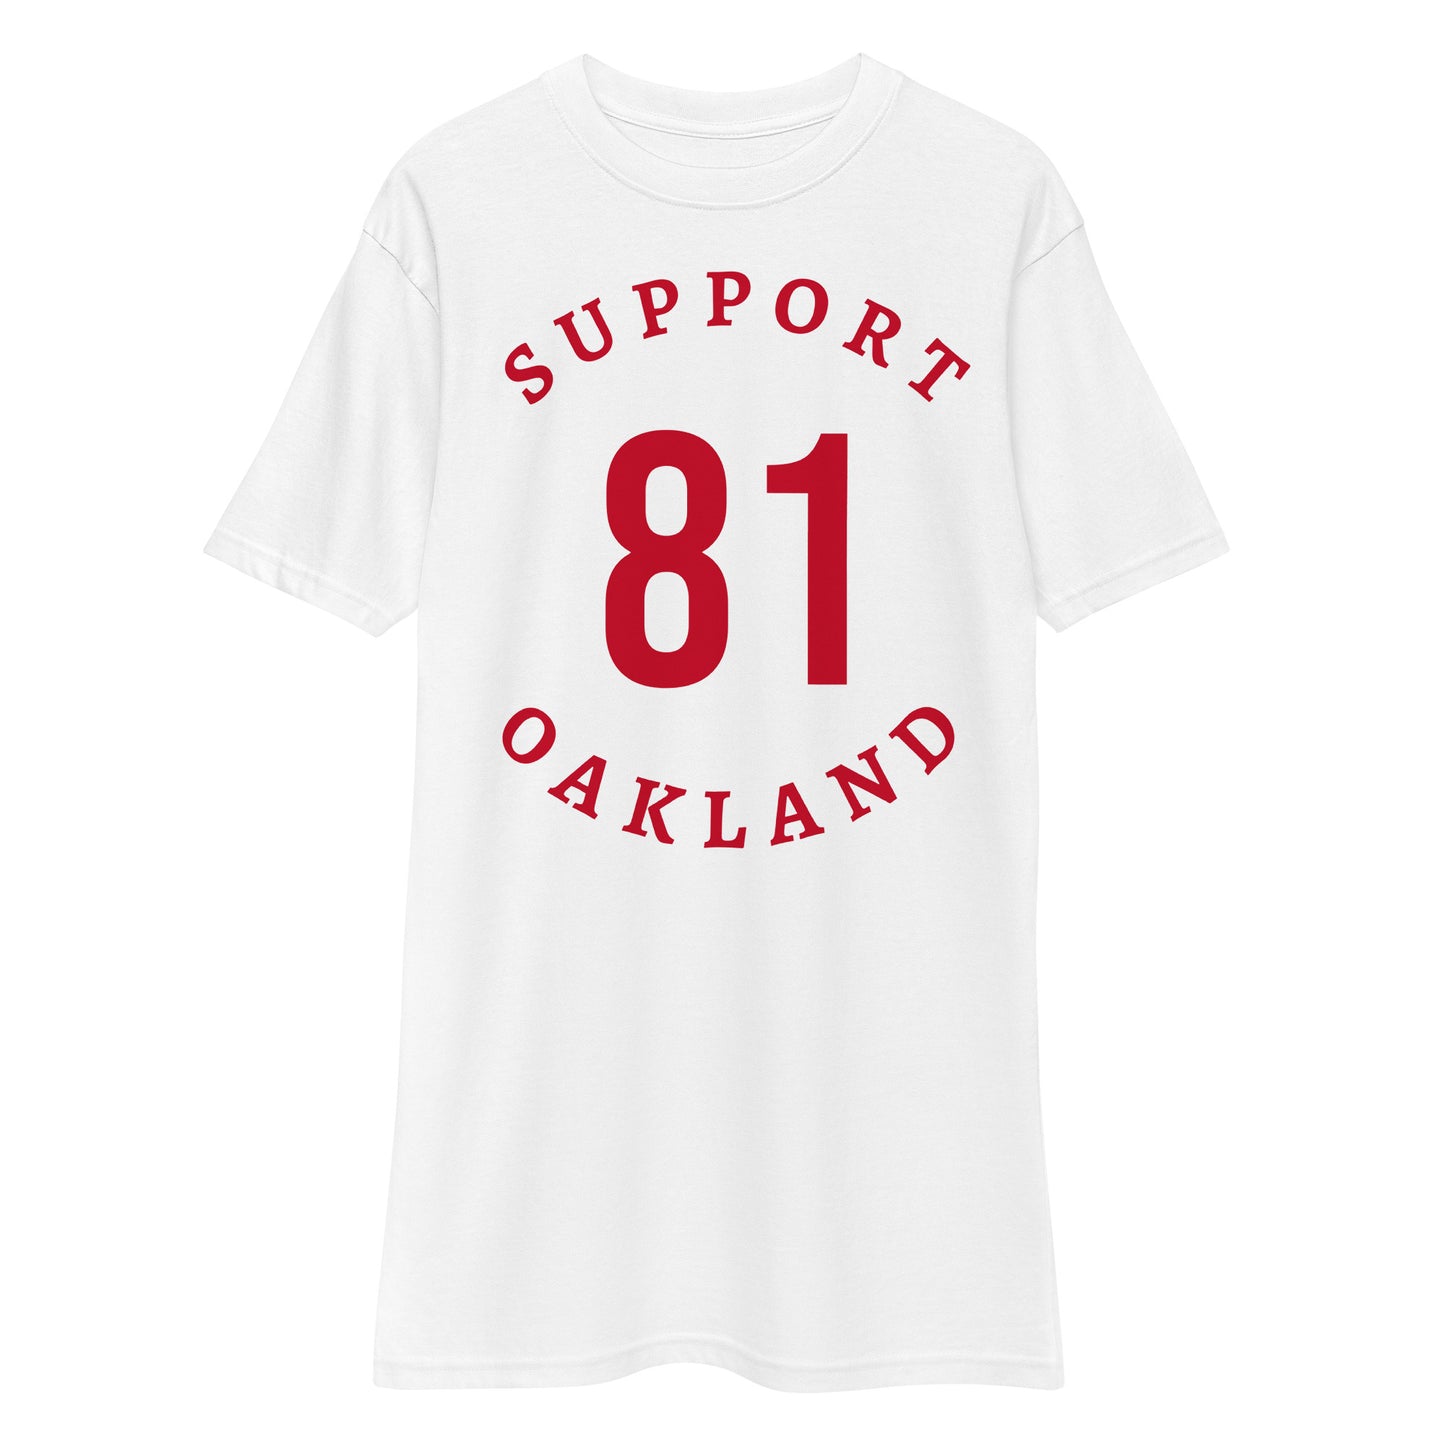 Support 81 Oakland -Men’s premium heavyweight tee